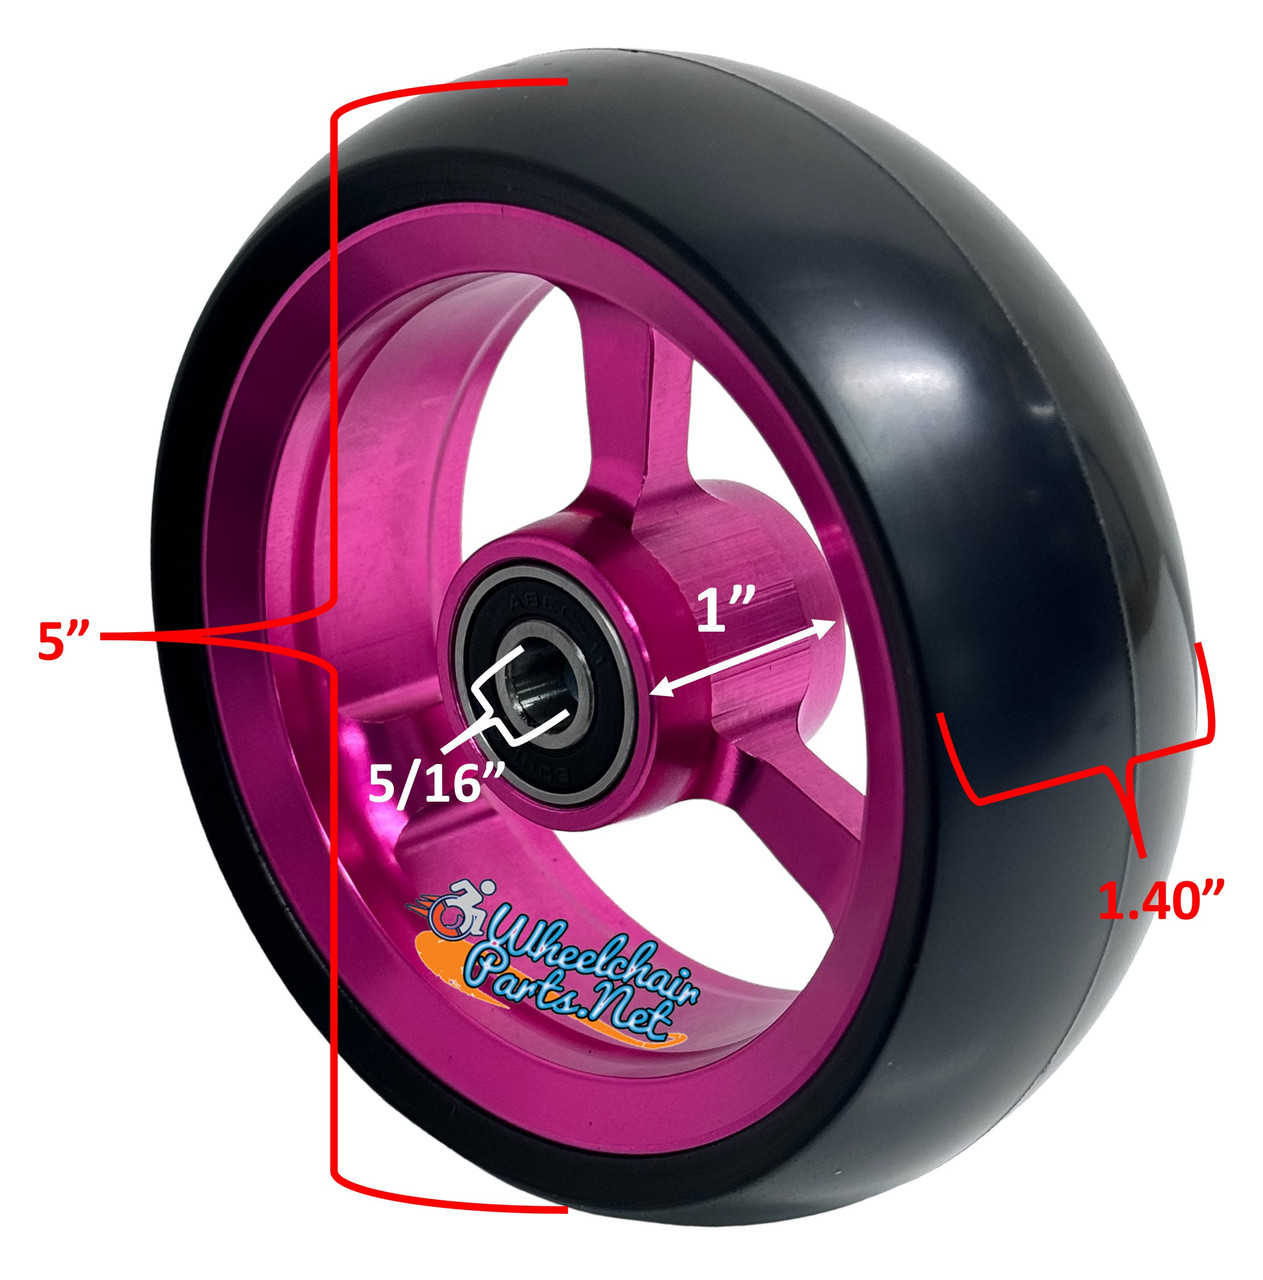 5" X 1.4" Aluminum 3 Spoke Wheel, Pink Rim / Soft Urethane Tire with 5/16" bearings.